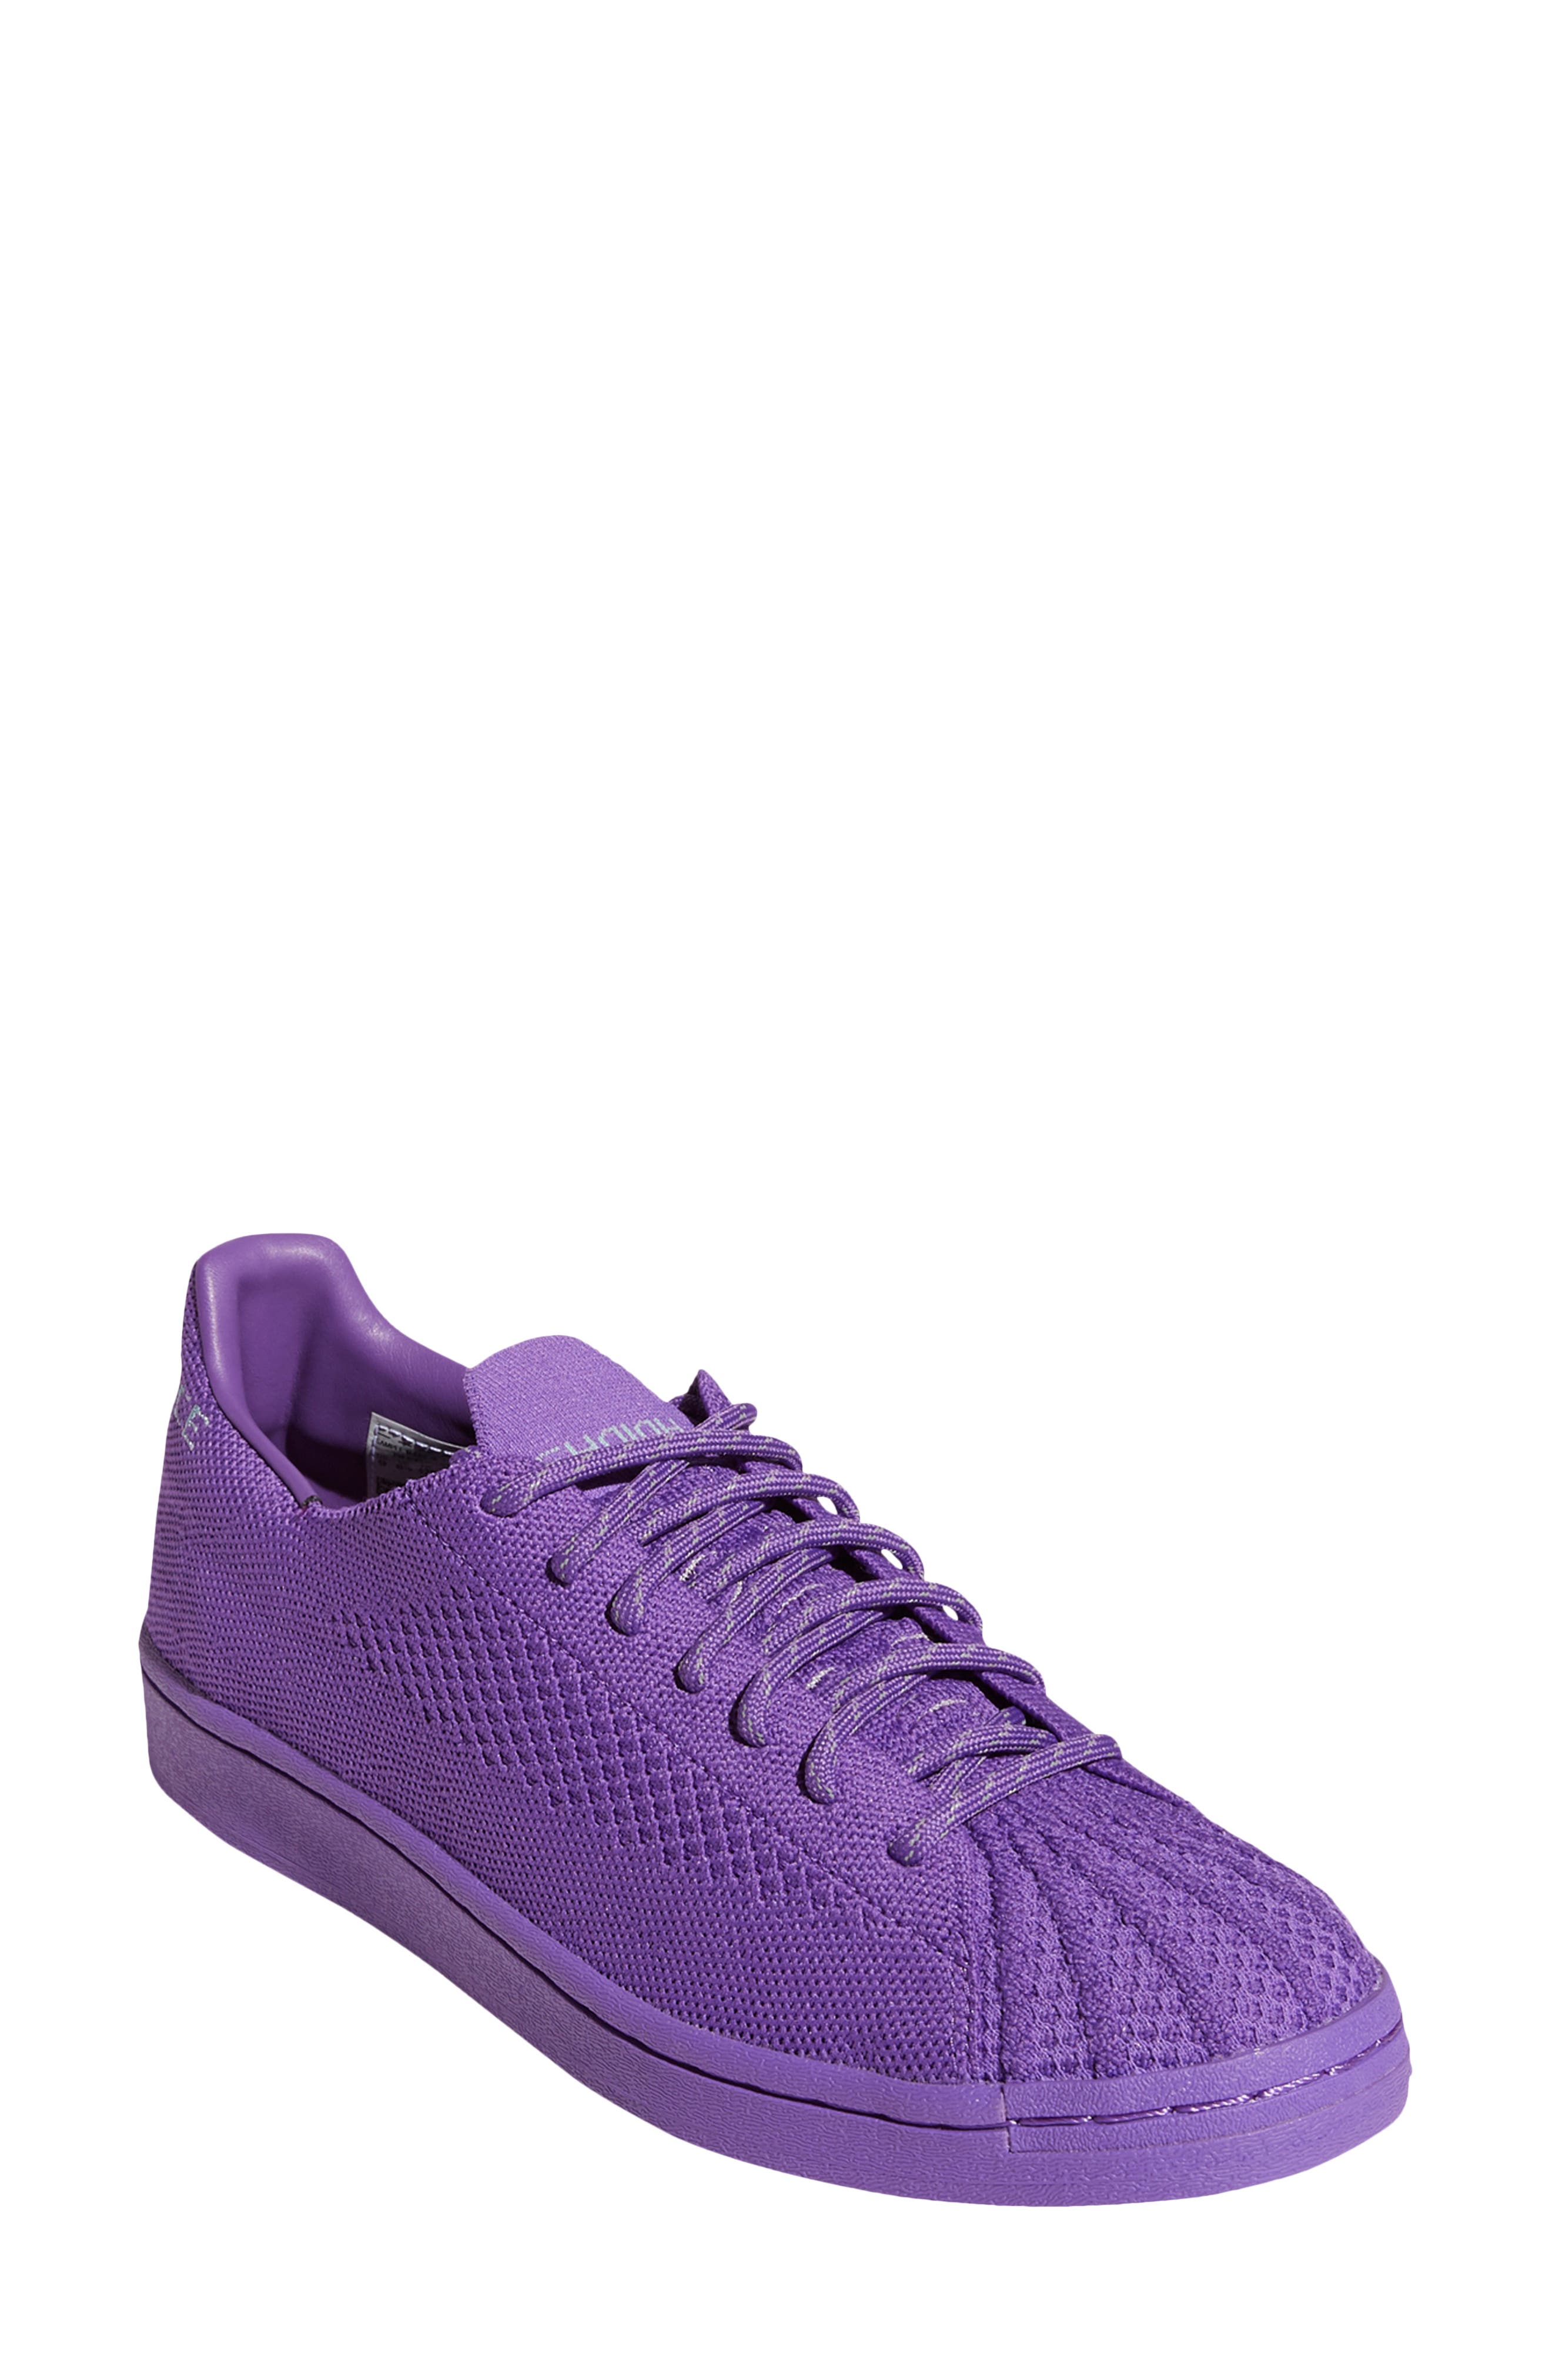 mens purple adidas